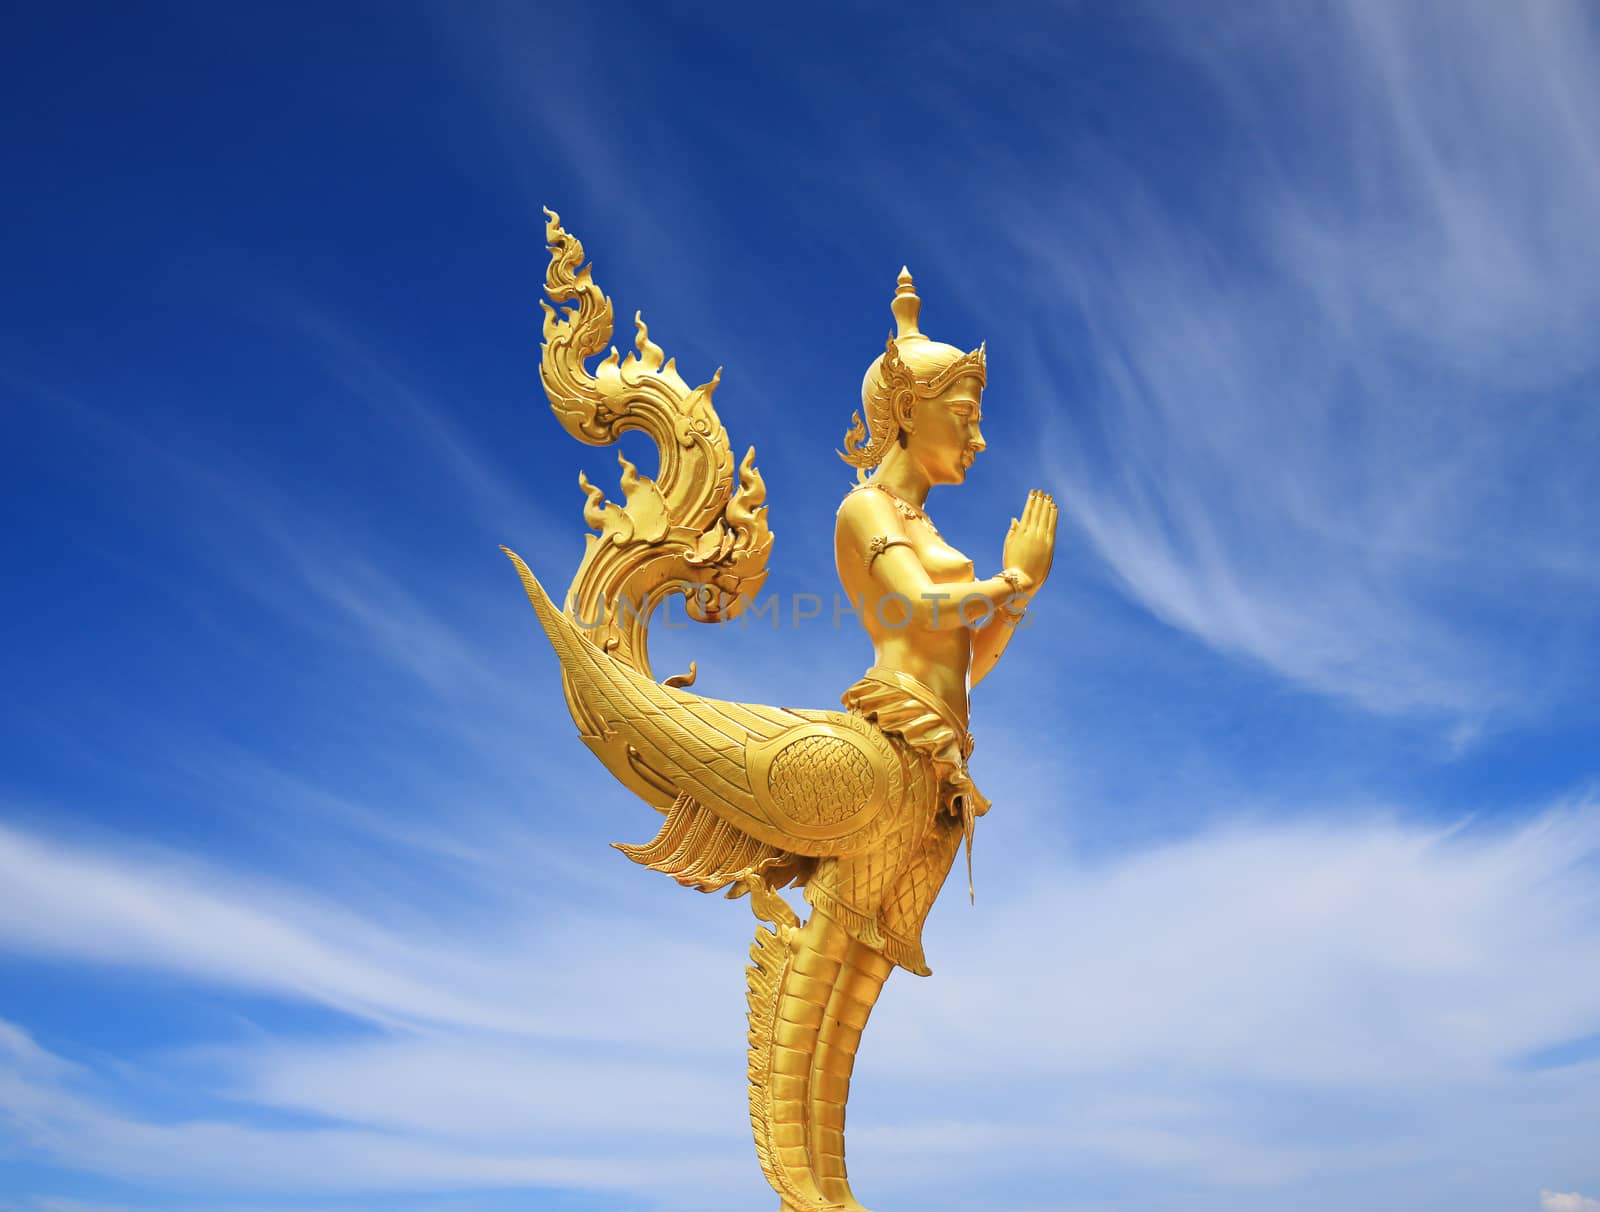 Sawasdee Golden Kinnari Statue with blue sky at Chainat Bird Park, Thailand on July 2014 